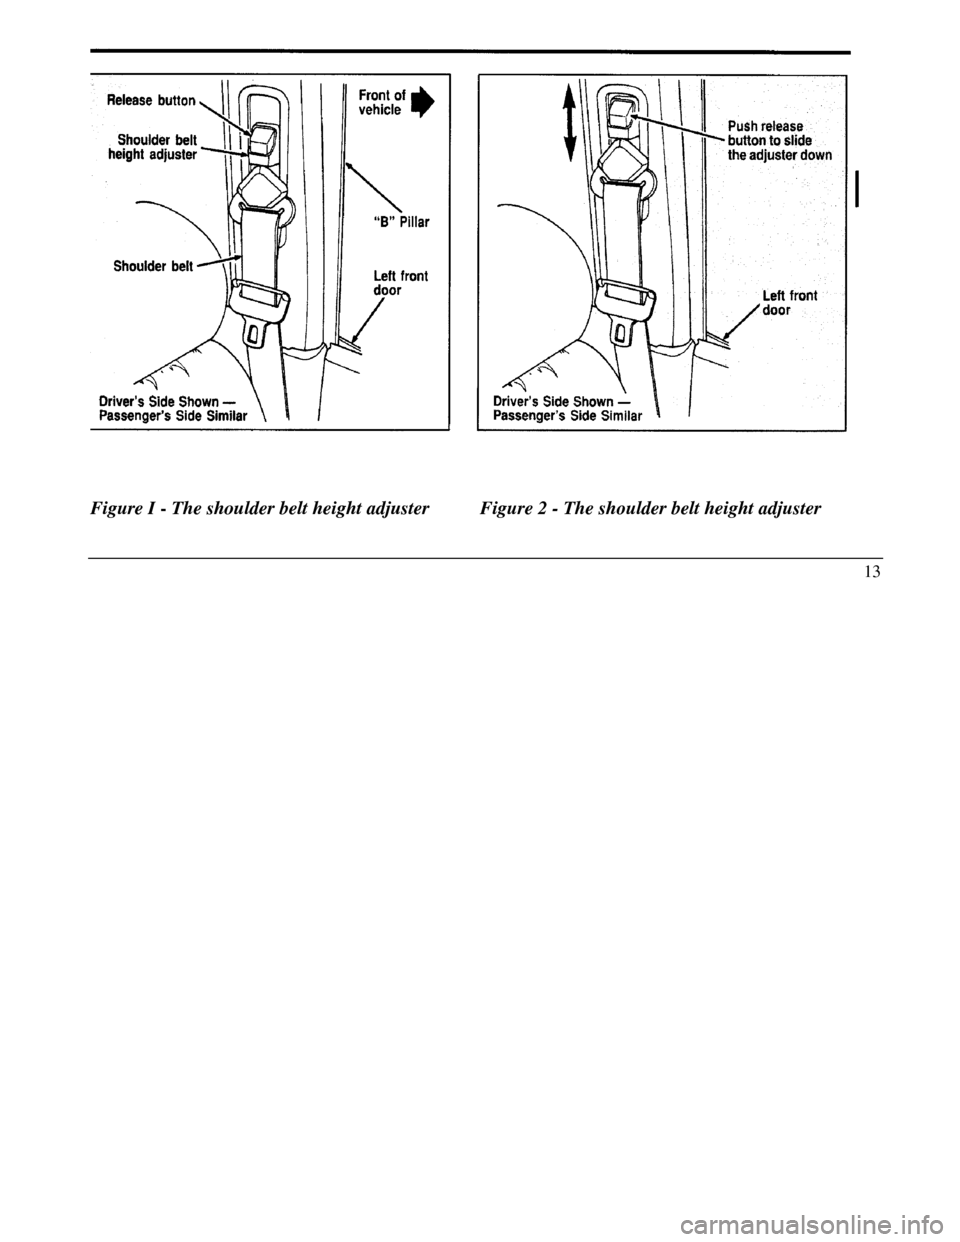 LINCOLN CONTINENTAL 1996  Customer Assistance Guide Figure I - The shoulder belt height adjusterFigure 2 - The shoulder belt height adjuster
13 